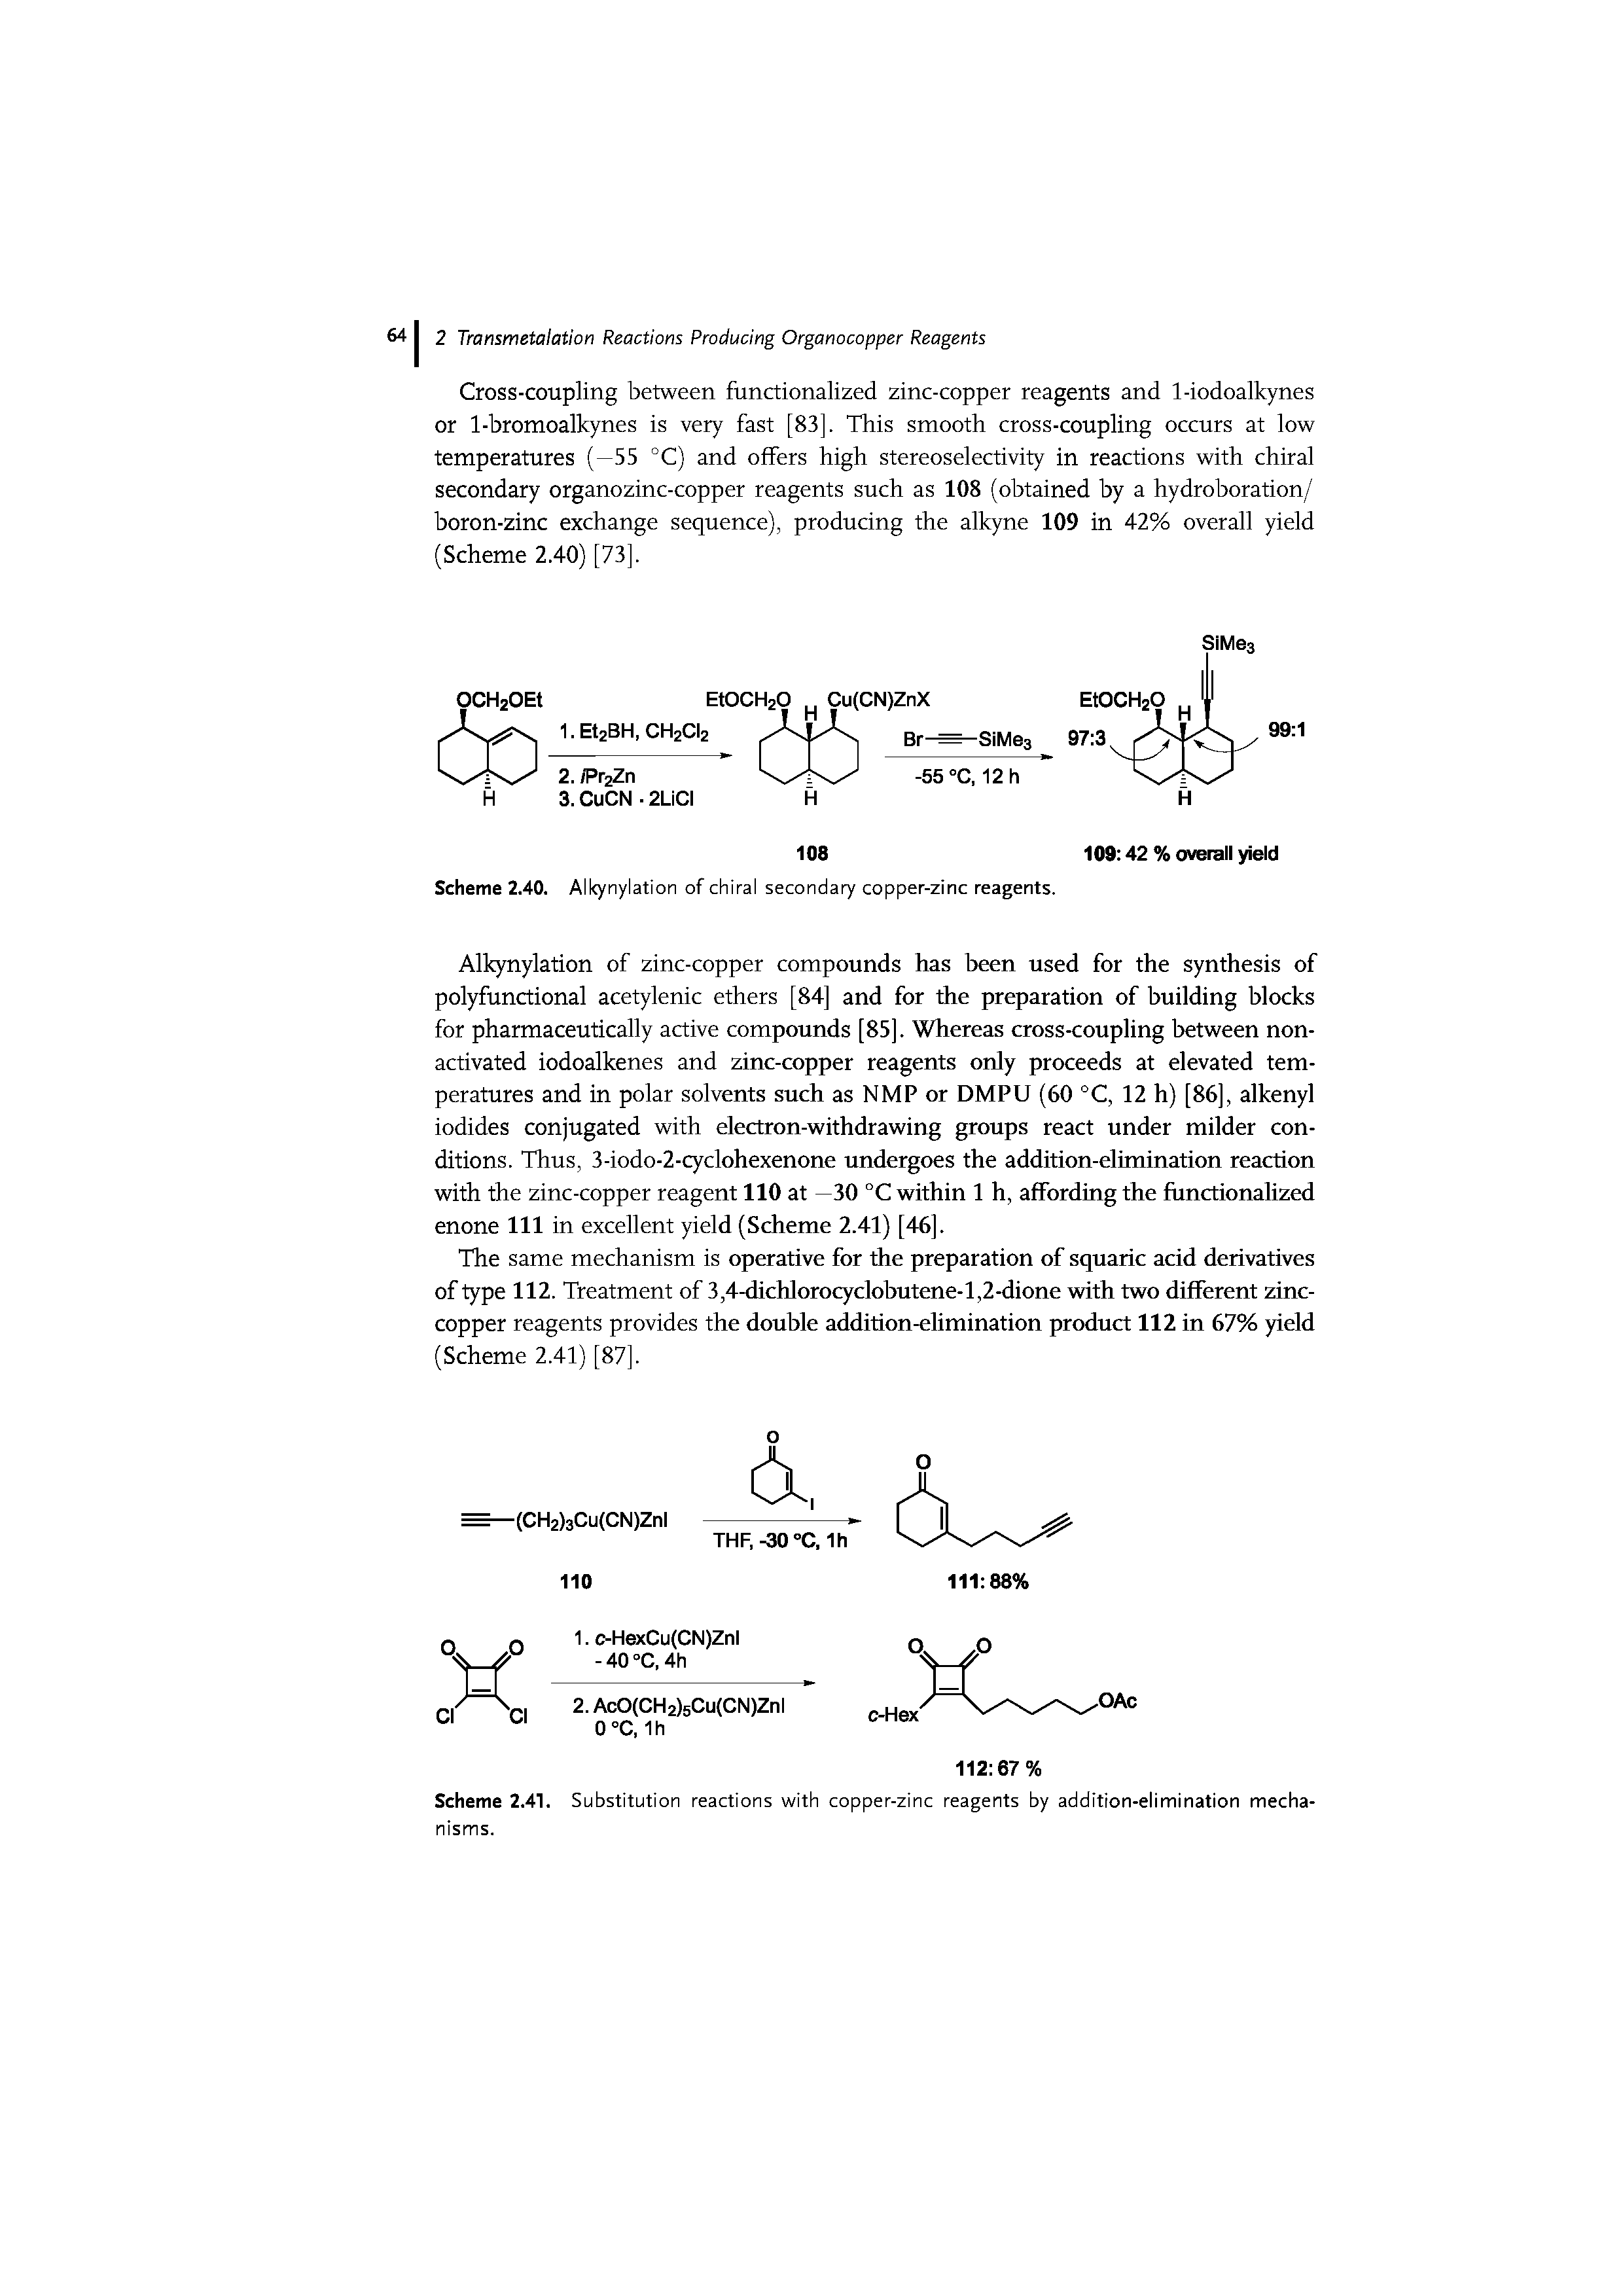 Scheme 2.40. Alkynylation of chiral secondary copper-zinc reagents.